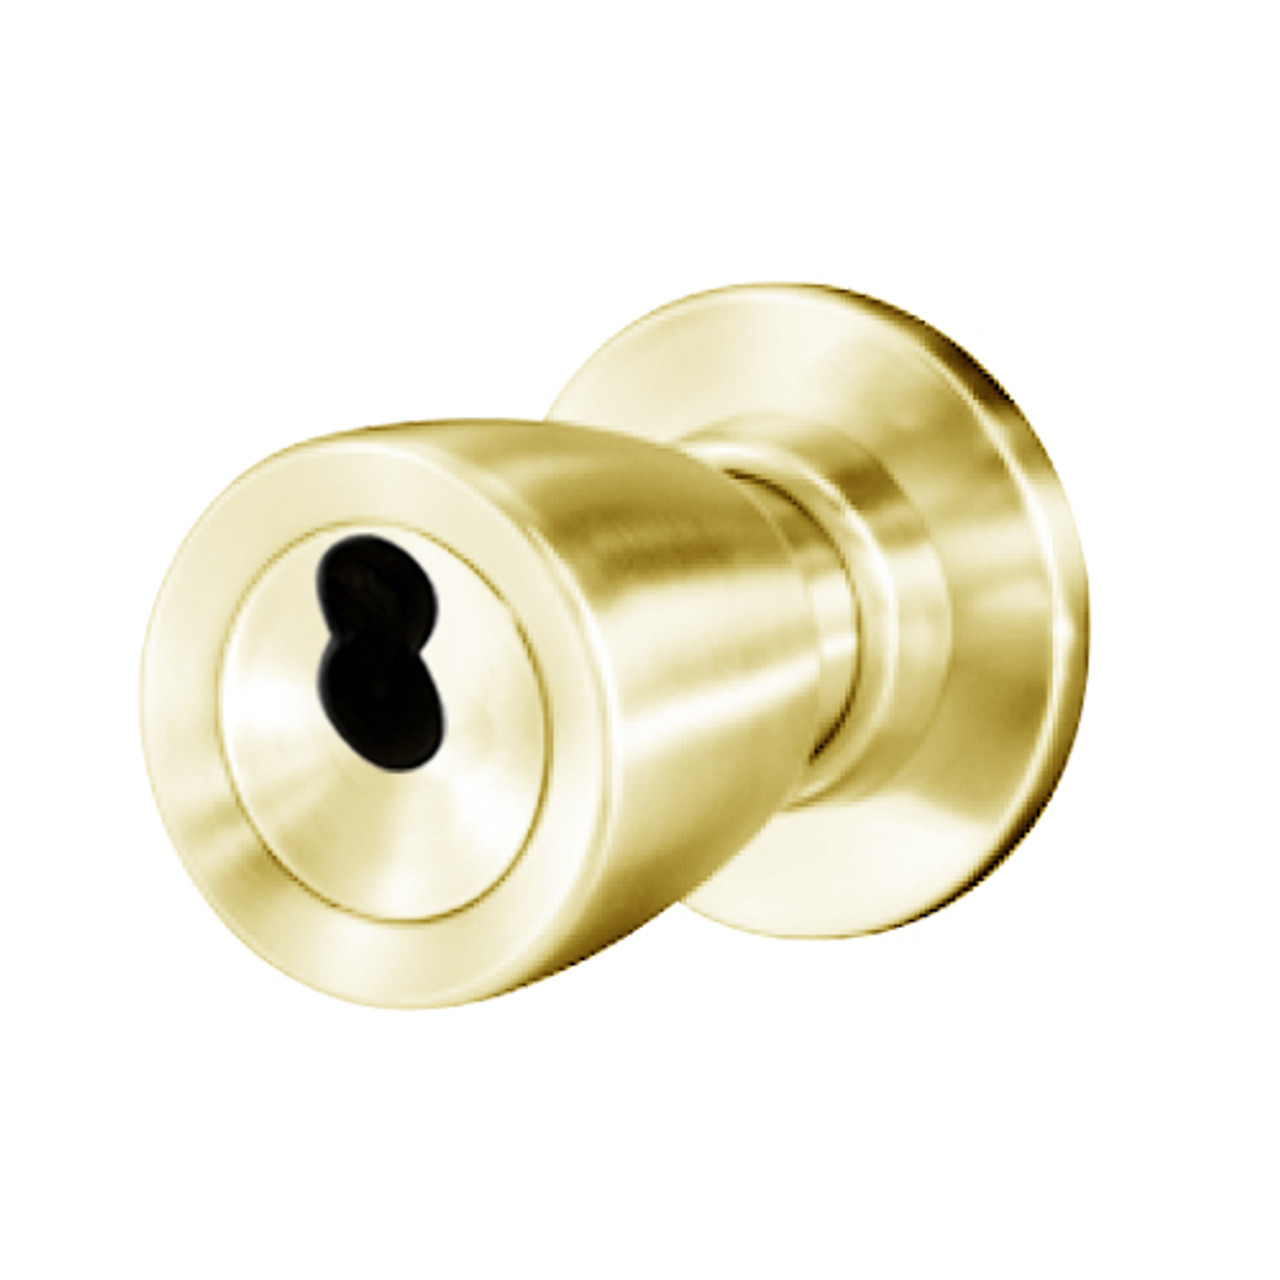 8K57YR6CS3605 Best 8K Series Exit Heavy Duty Cylindrical Knob Locks with Tulip Style in Bright Brass